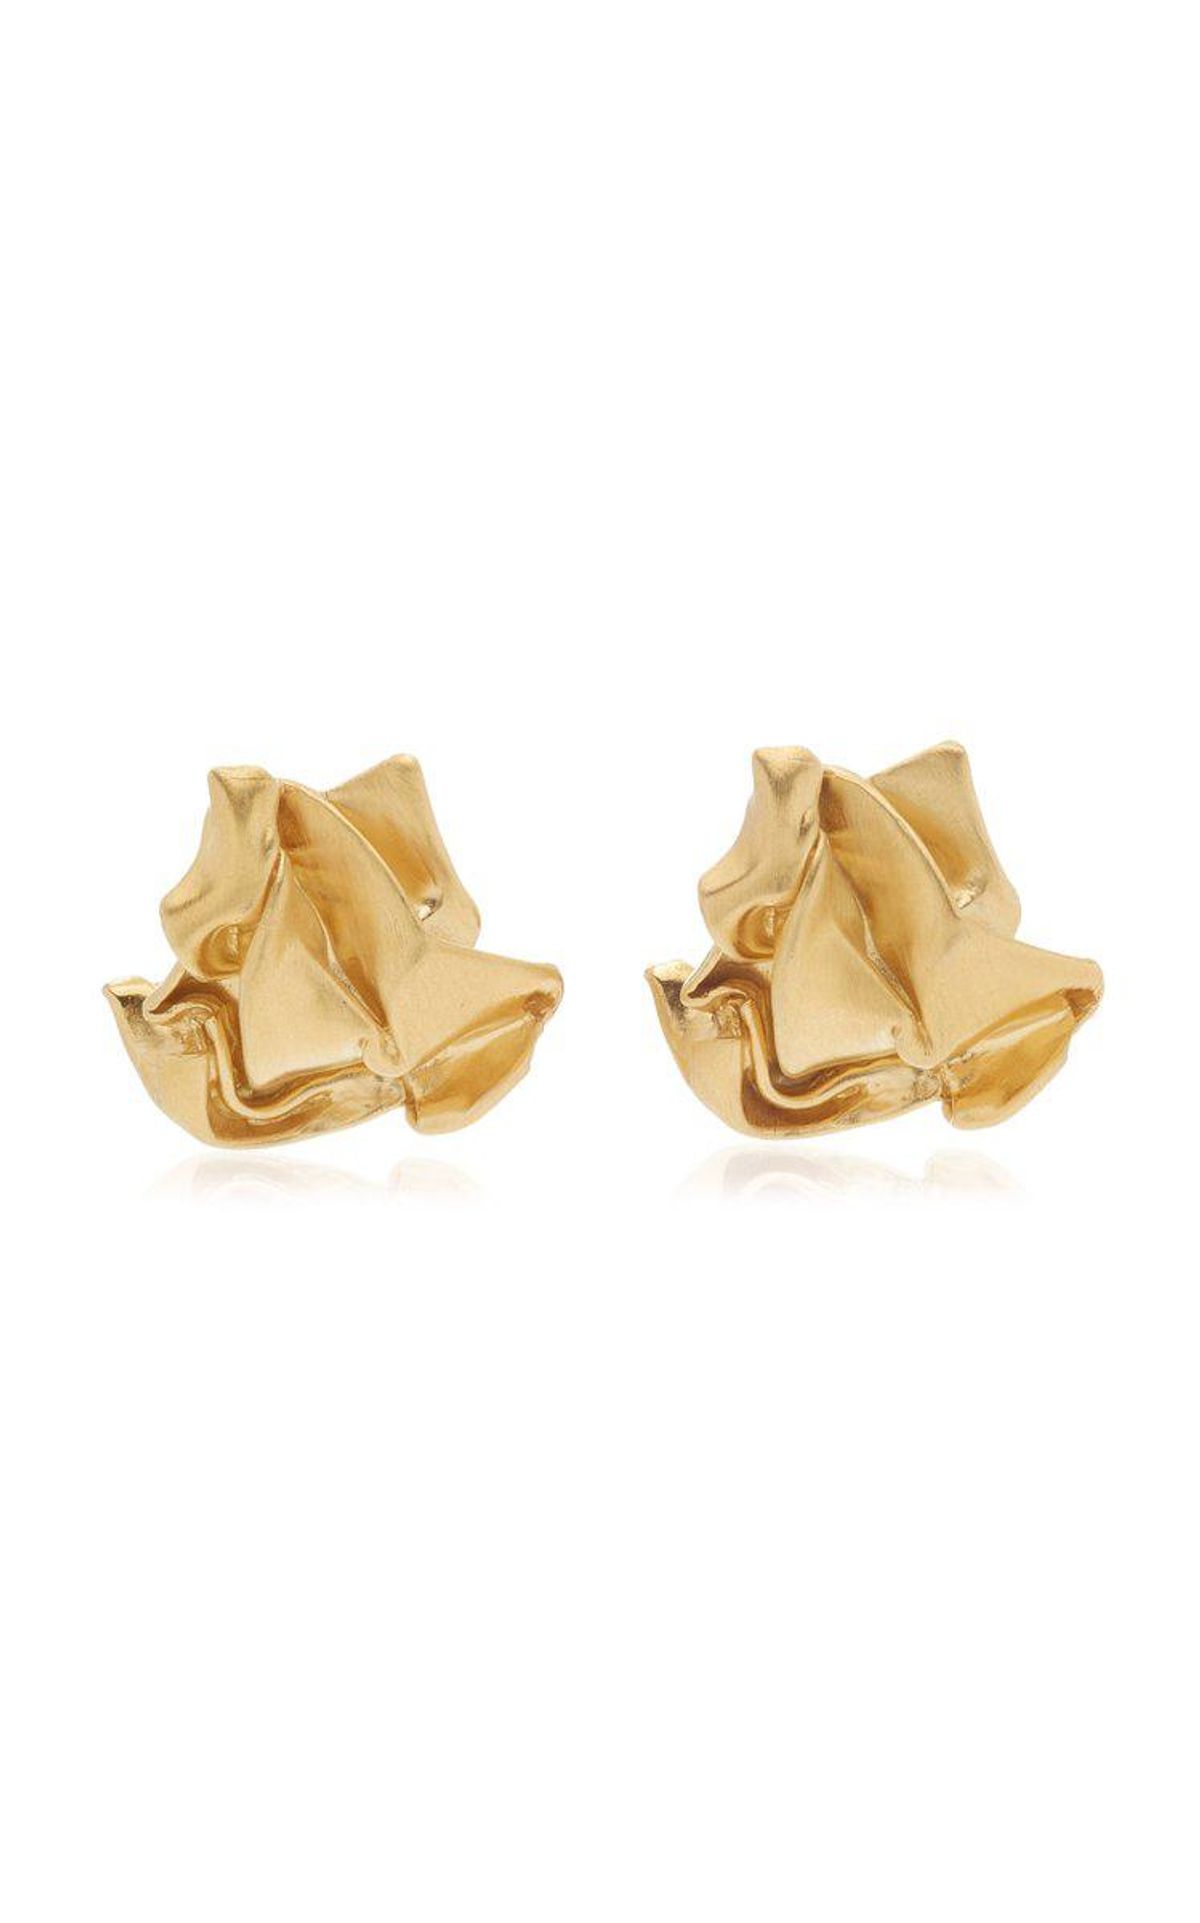 Crunched 14k Gold Vermeil Earrings